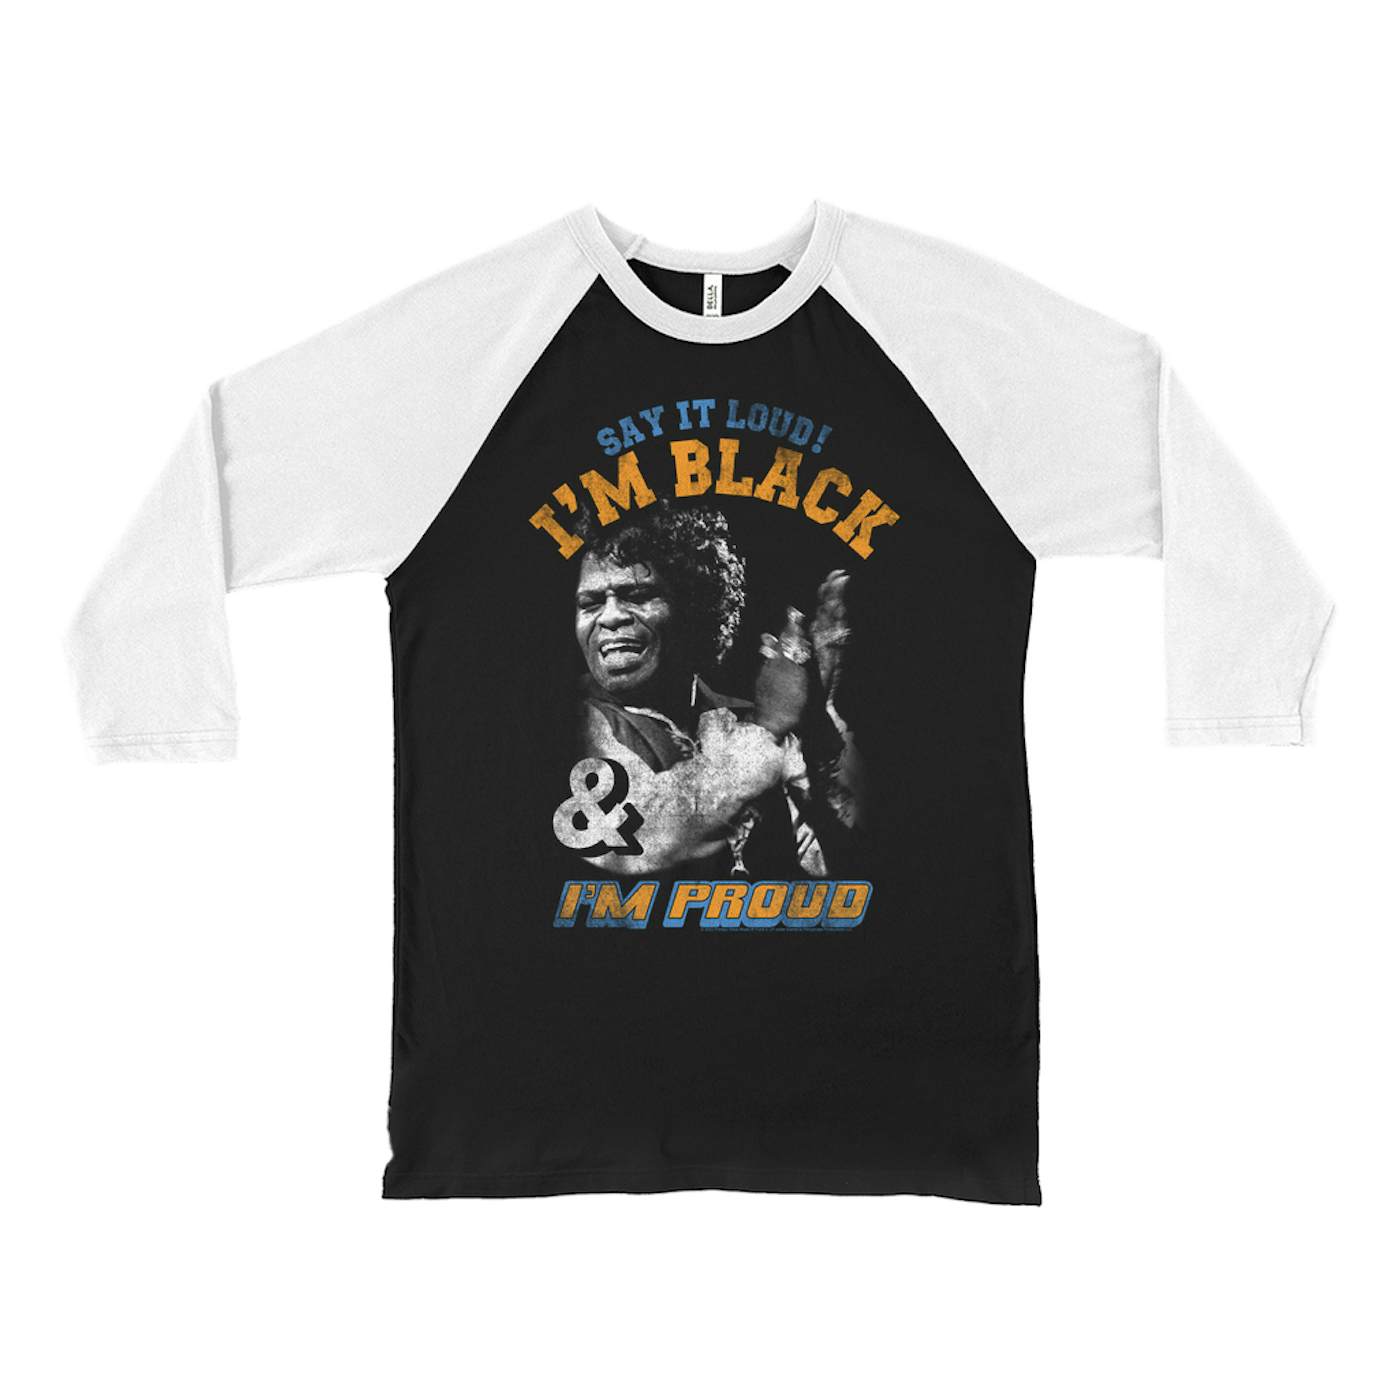 James Brown 3/4 Sleeve Baseball Tee | Say It Loud! Black And Proud Distressed James Brown Shirt